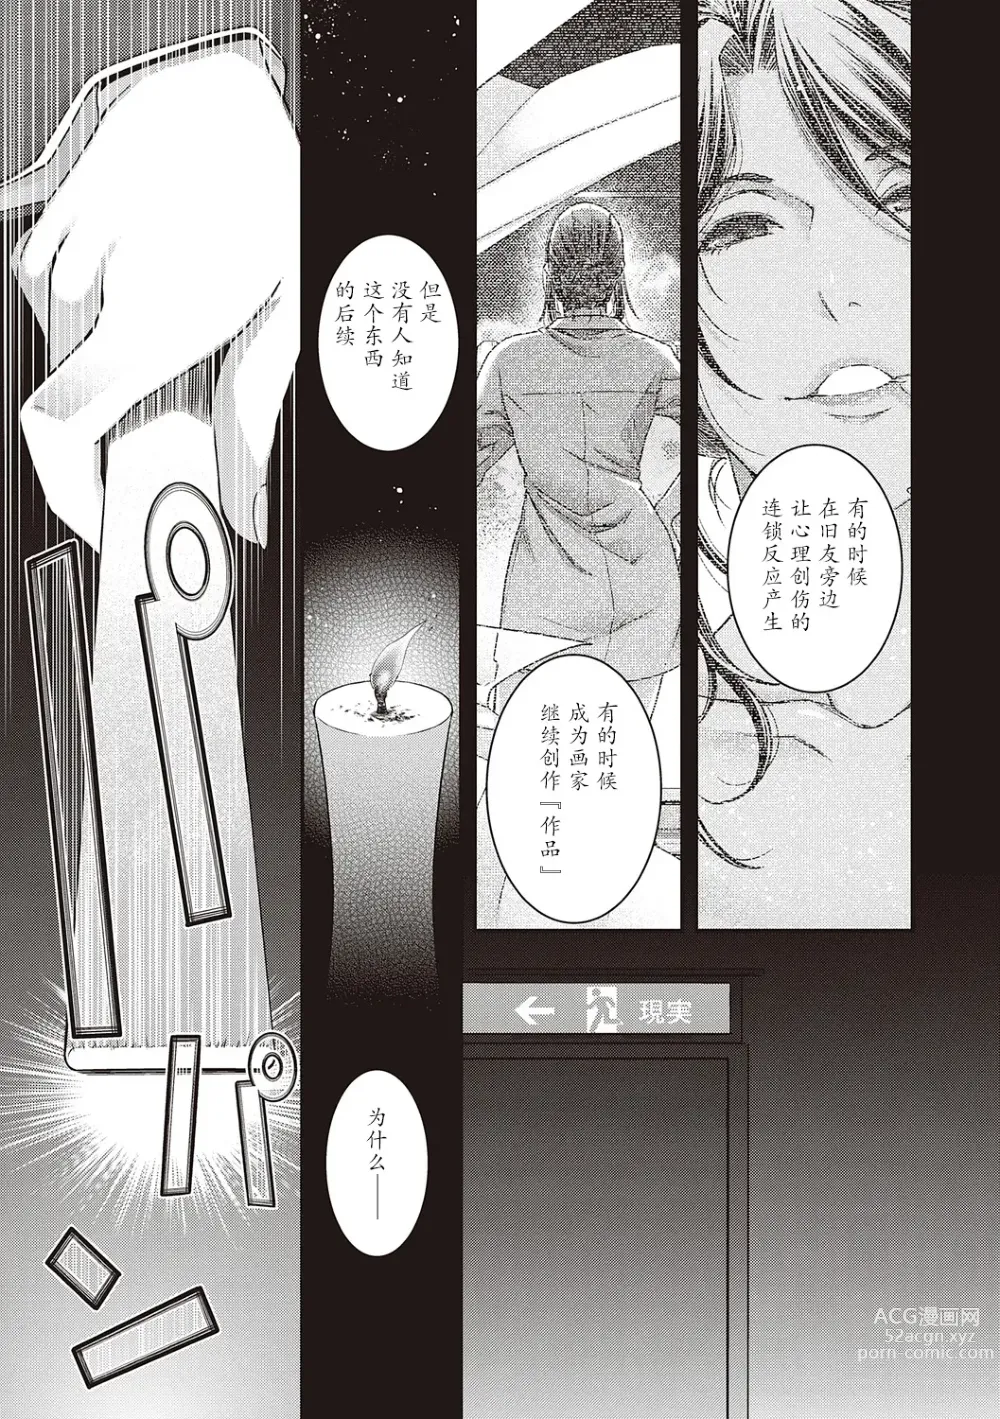 Page 7 of manga 彼誰時家族会議  演目『廻夜のケモノ』